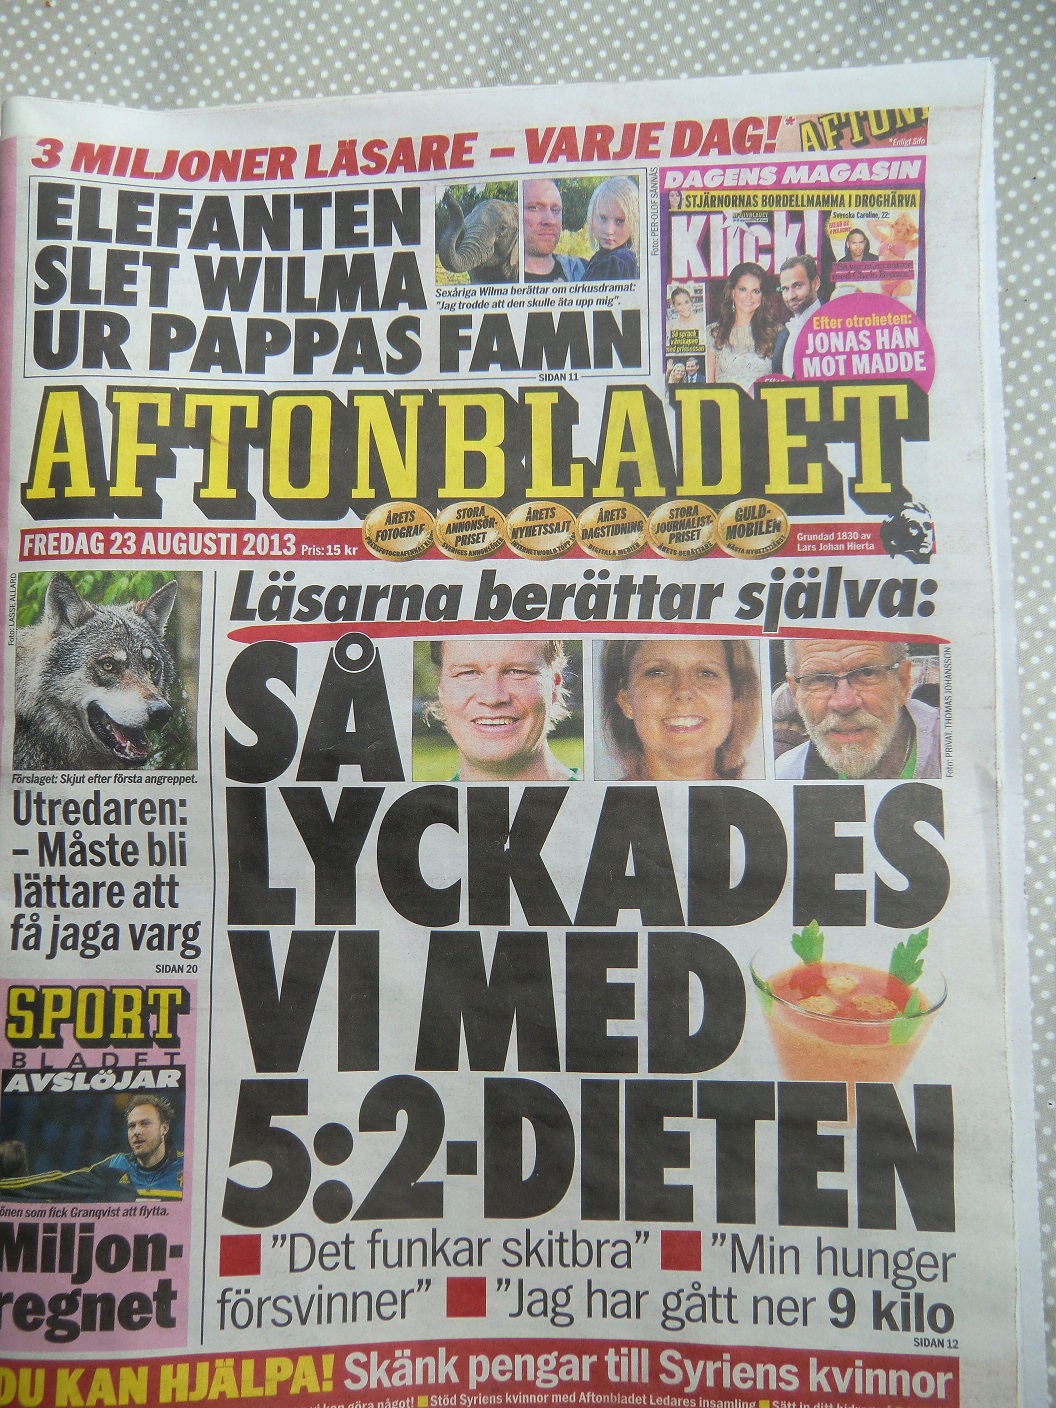 52dietenaftonbladet